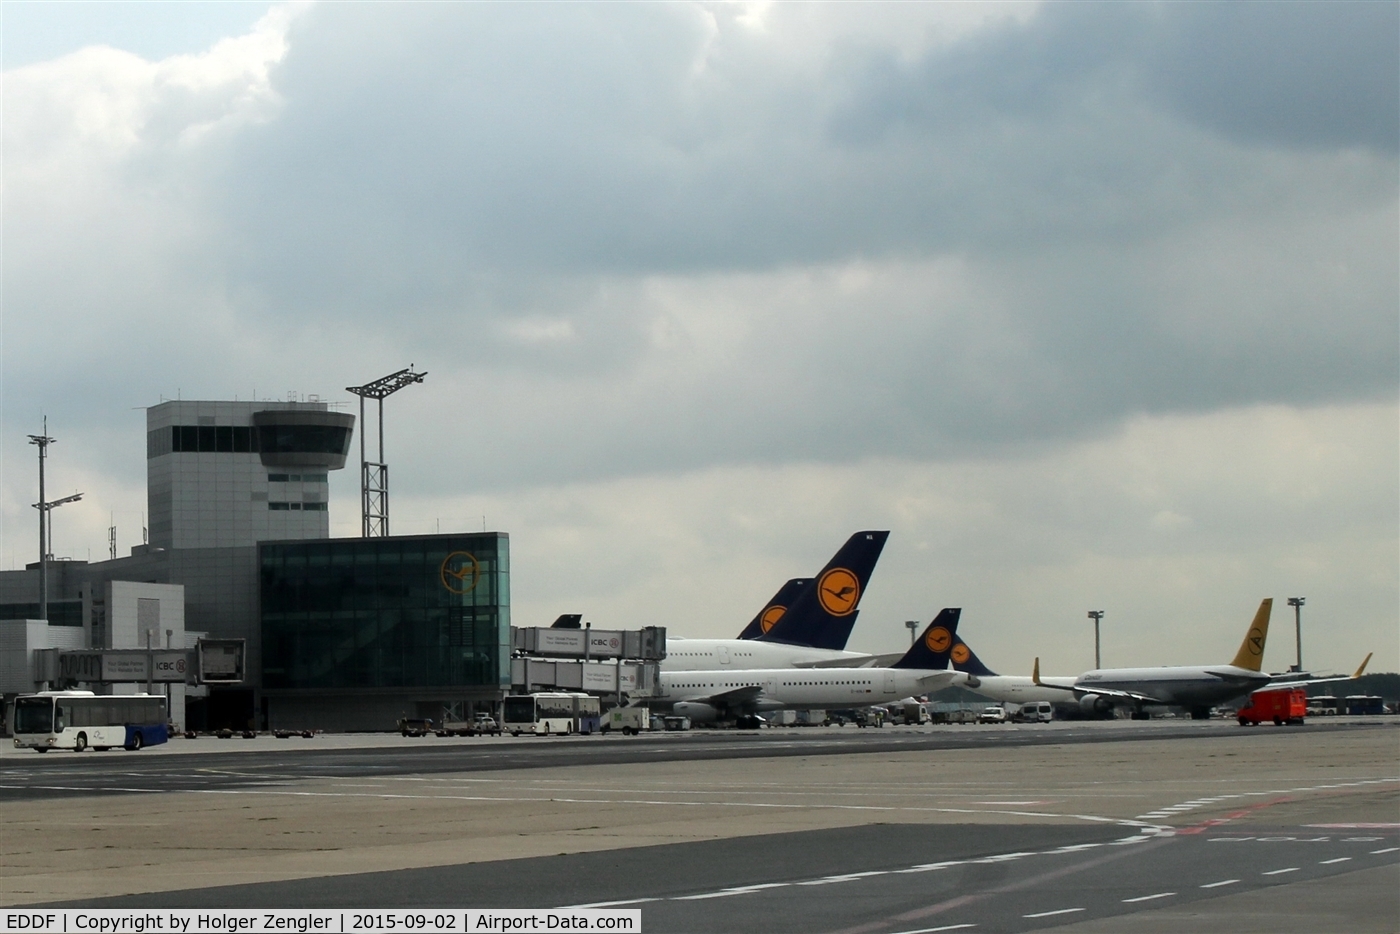 Frankfurt International Airport, Frankfurt am Main Germany (EDDF) - Here we are in Lufthansa´s world....